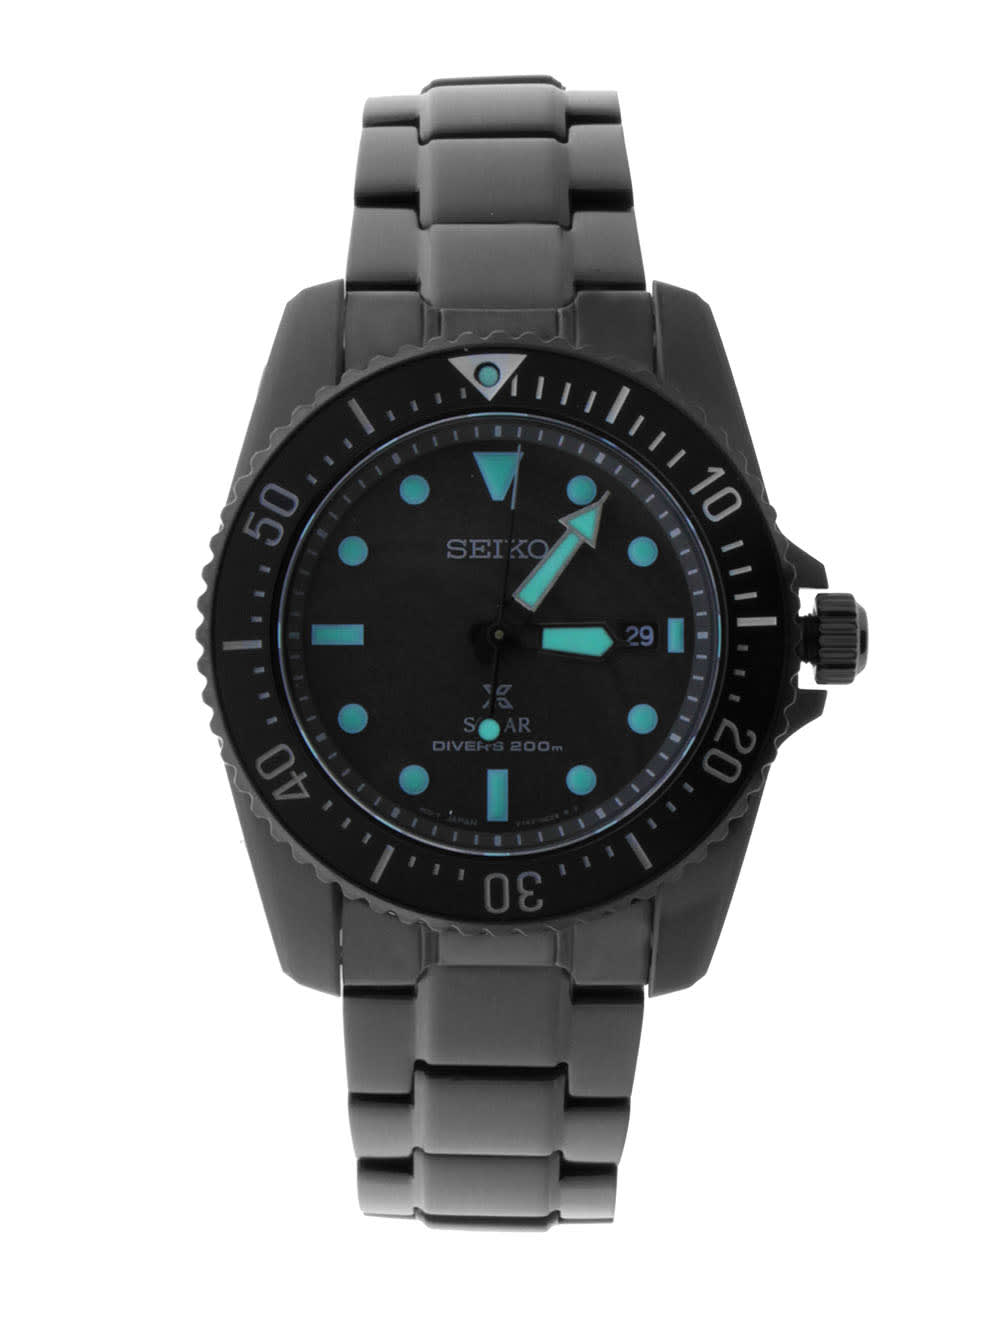 Seiko Prospex Sne587p1 Black Series Night Vision Solare Limited Edition Watches